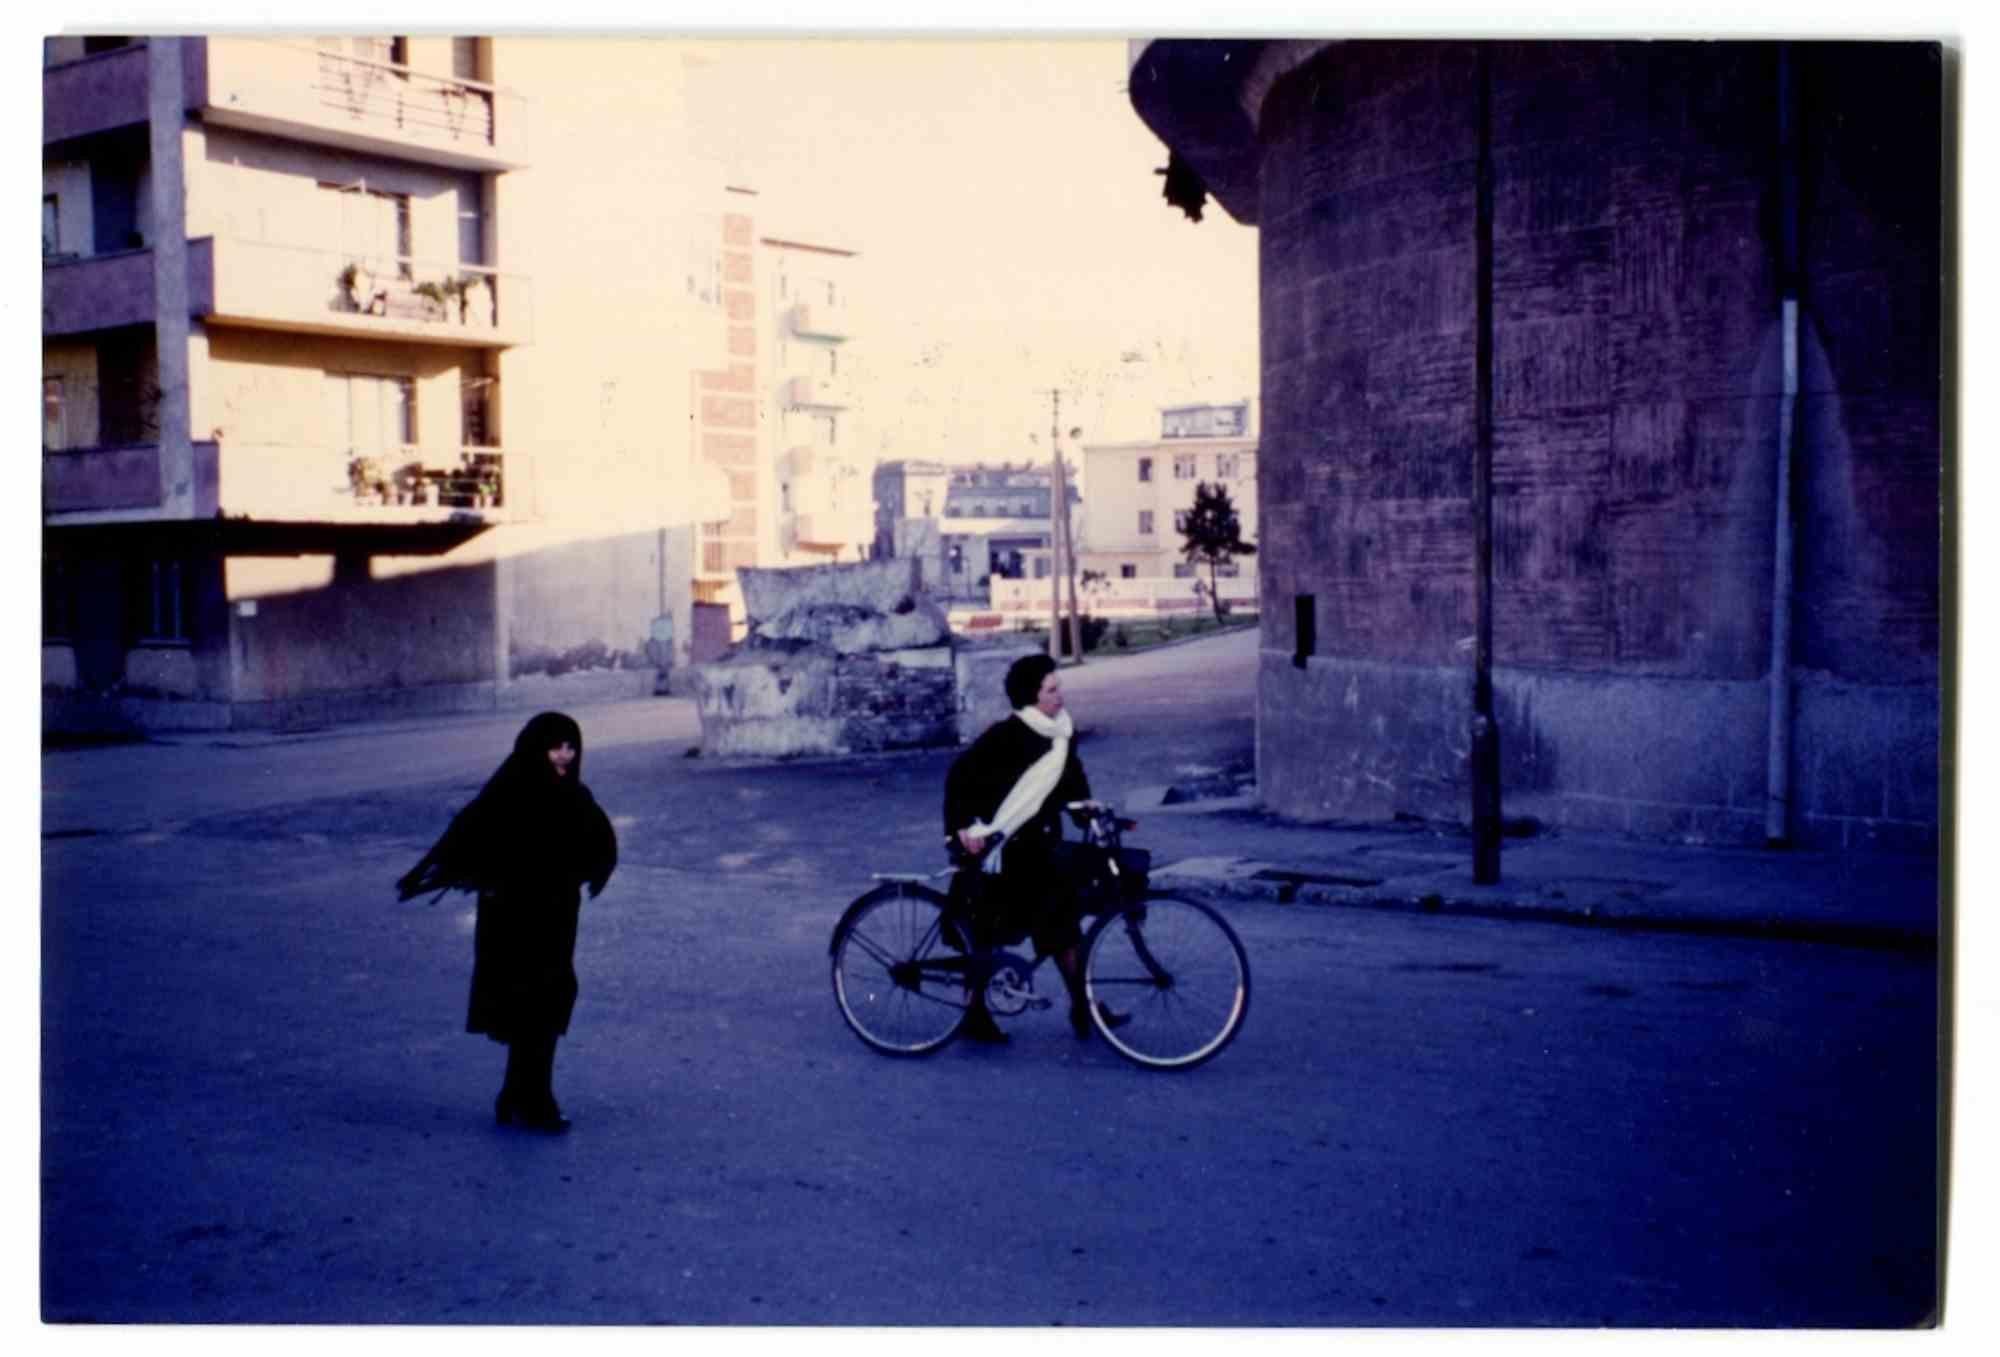 Unknown Landscape Photograph - Reportage from Albania - Tirana - Photograph - Late 1970s